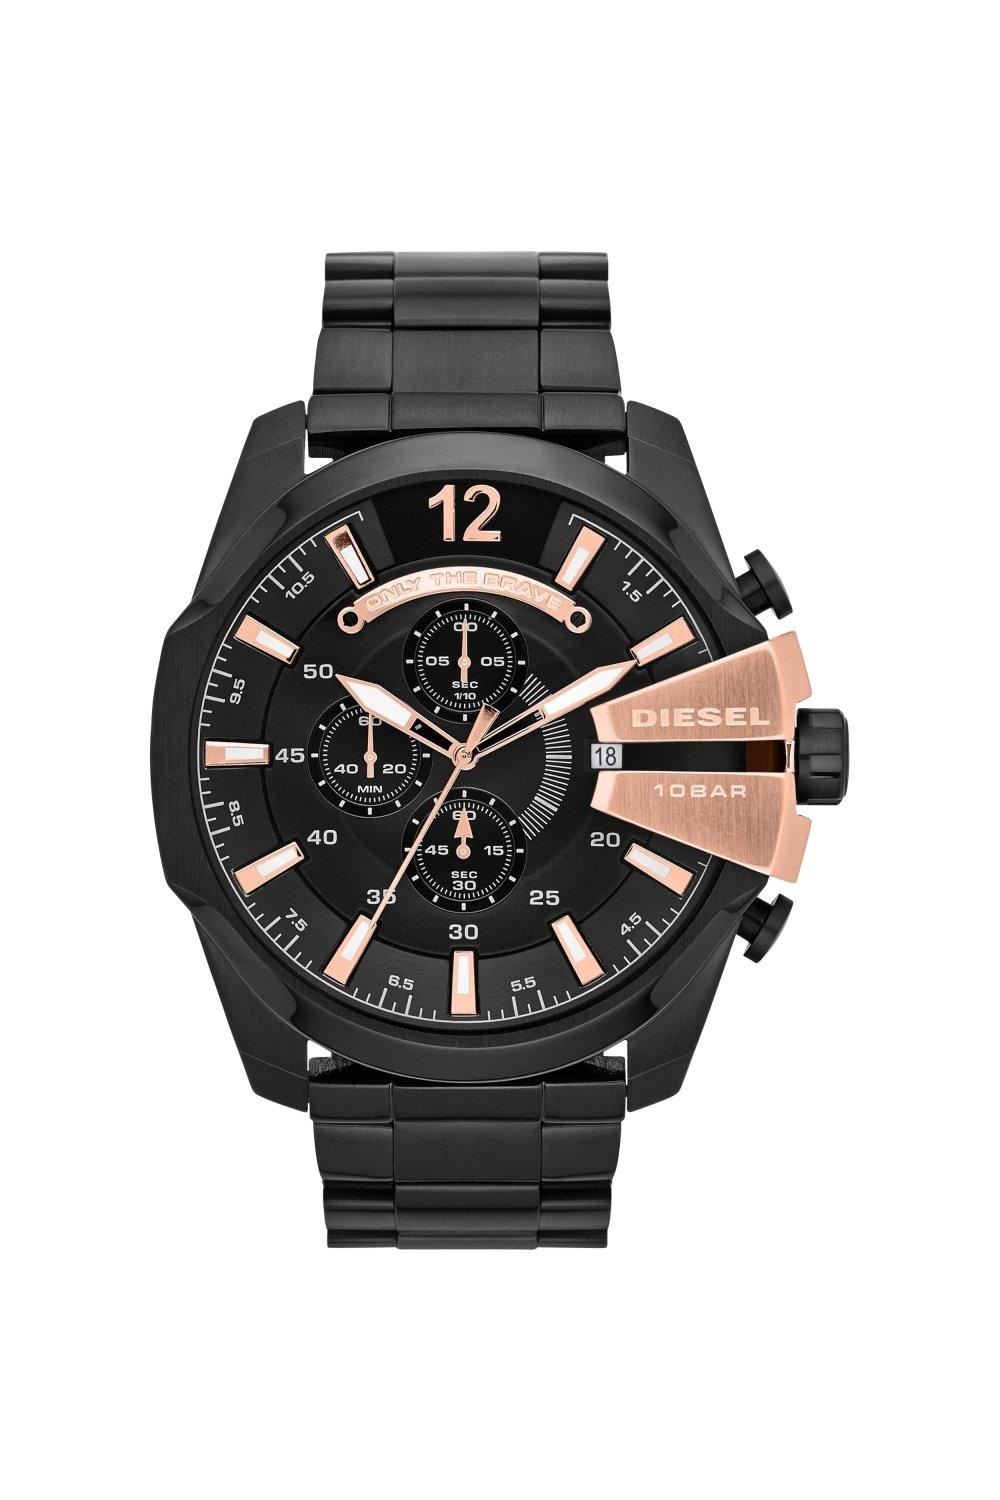 Chief Plated Stainless Steel Fashion Analogue Quartz Watch - Dz4309